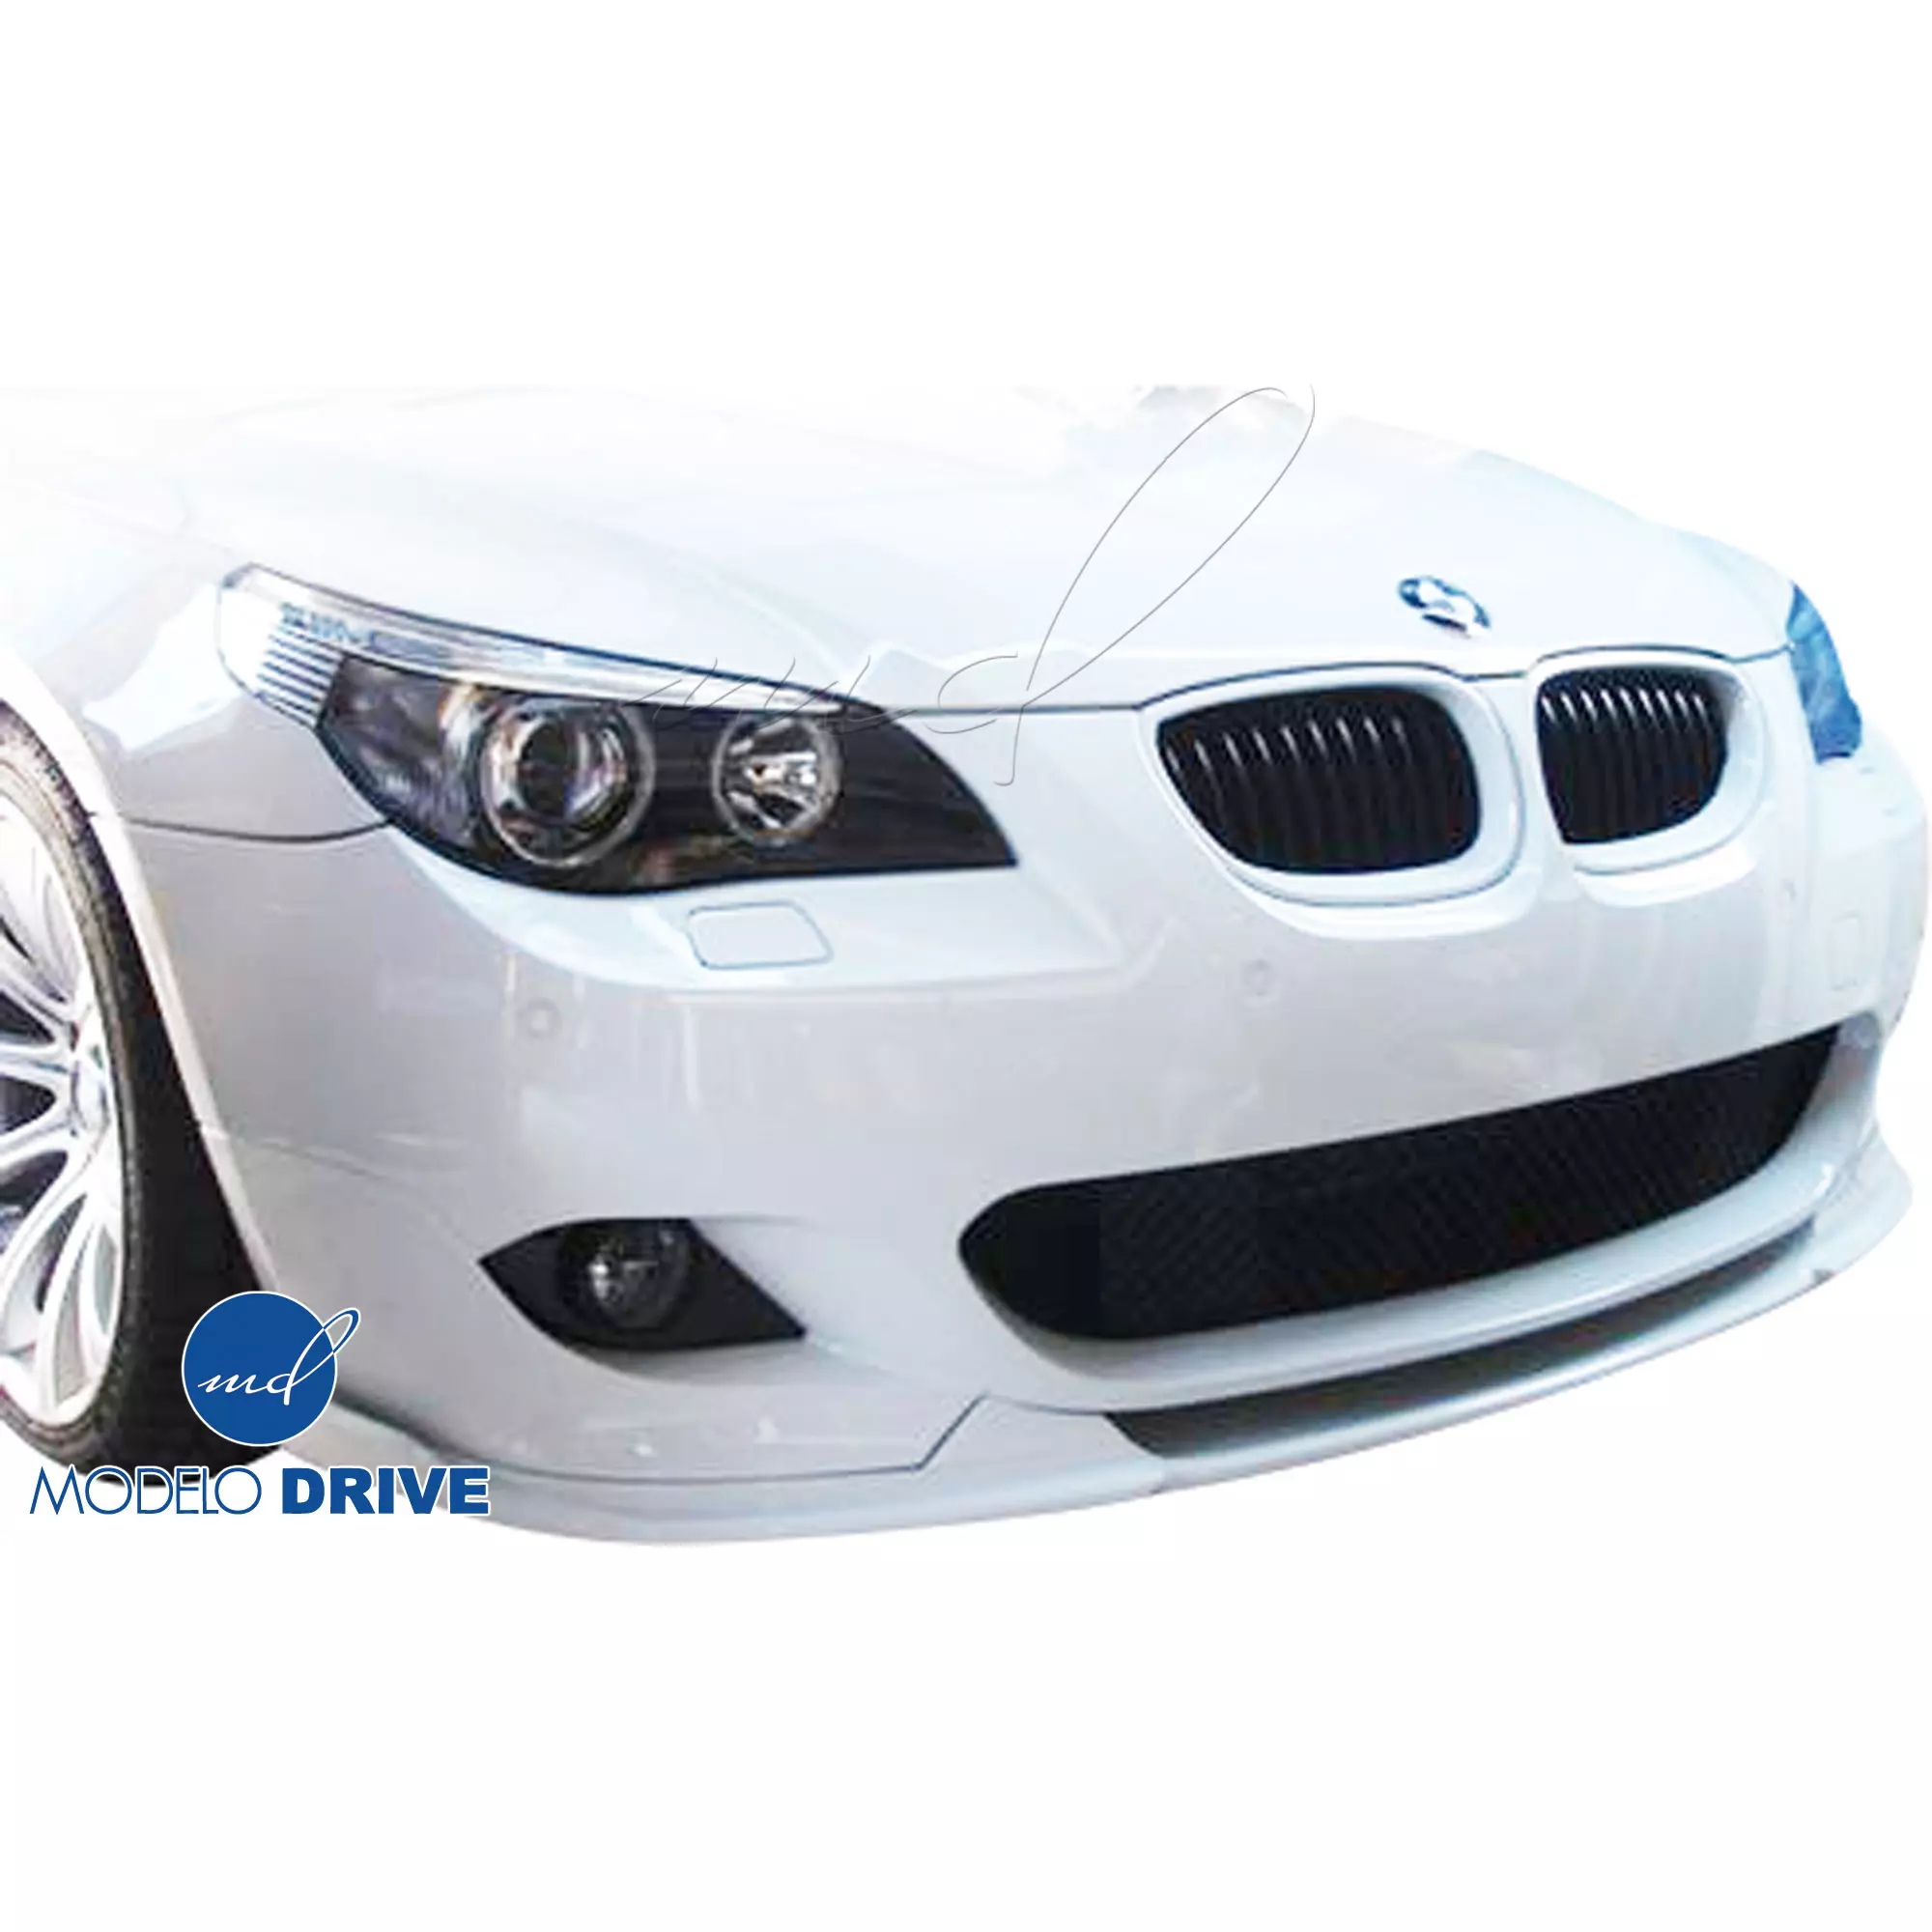 ModeloDrive Plastic HAMA MTEC Front Valance Add-on > BMW 5-Series E60 2004-2010 > 4dr - Image 1